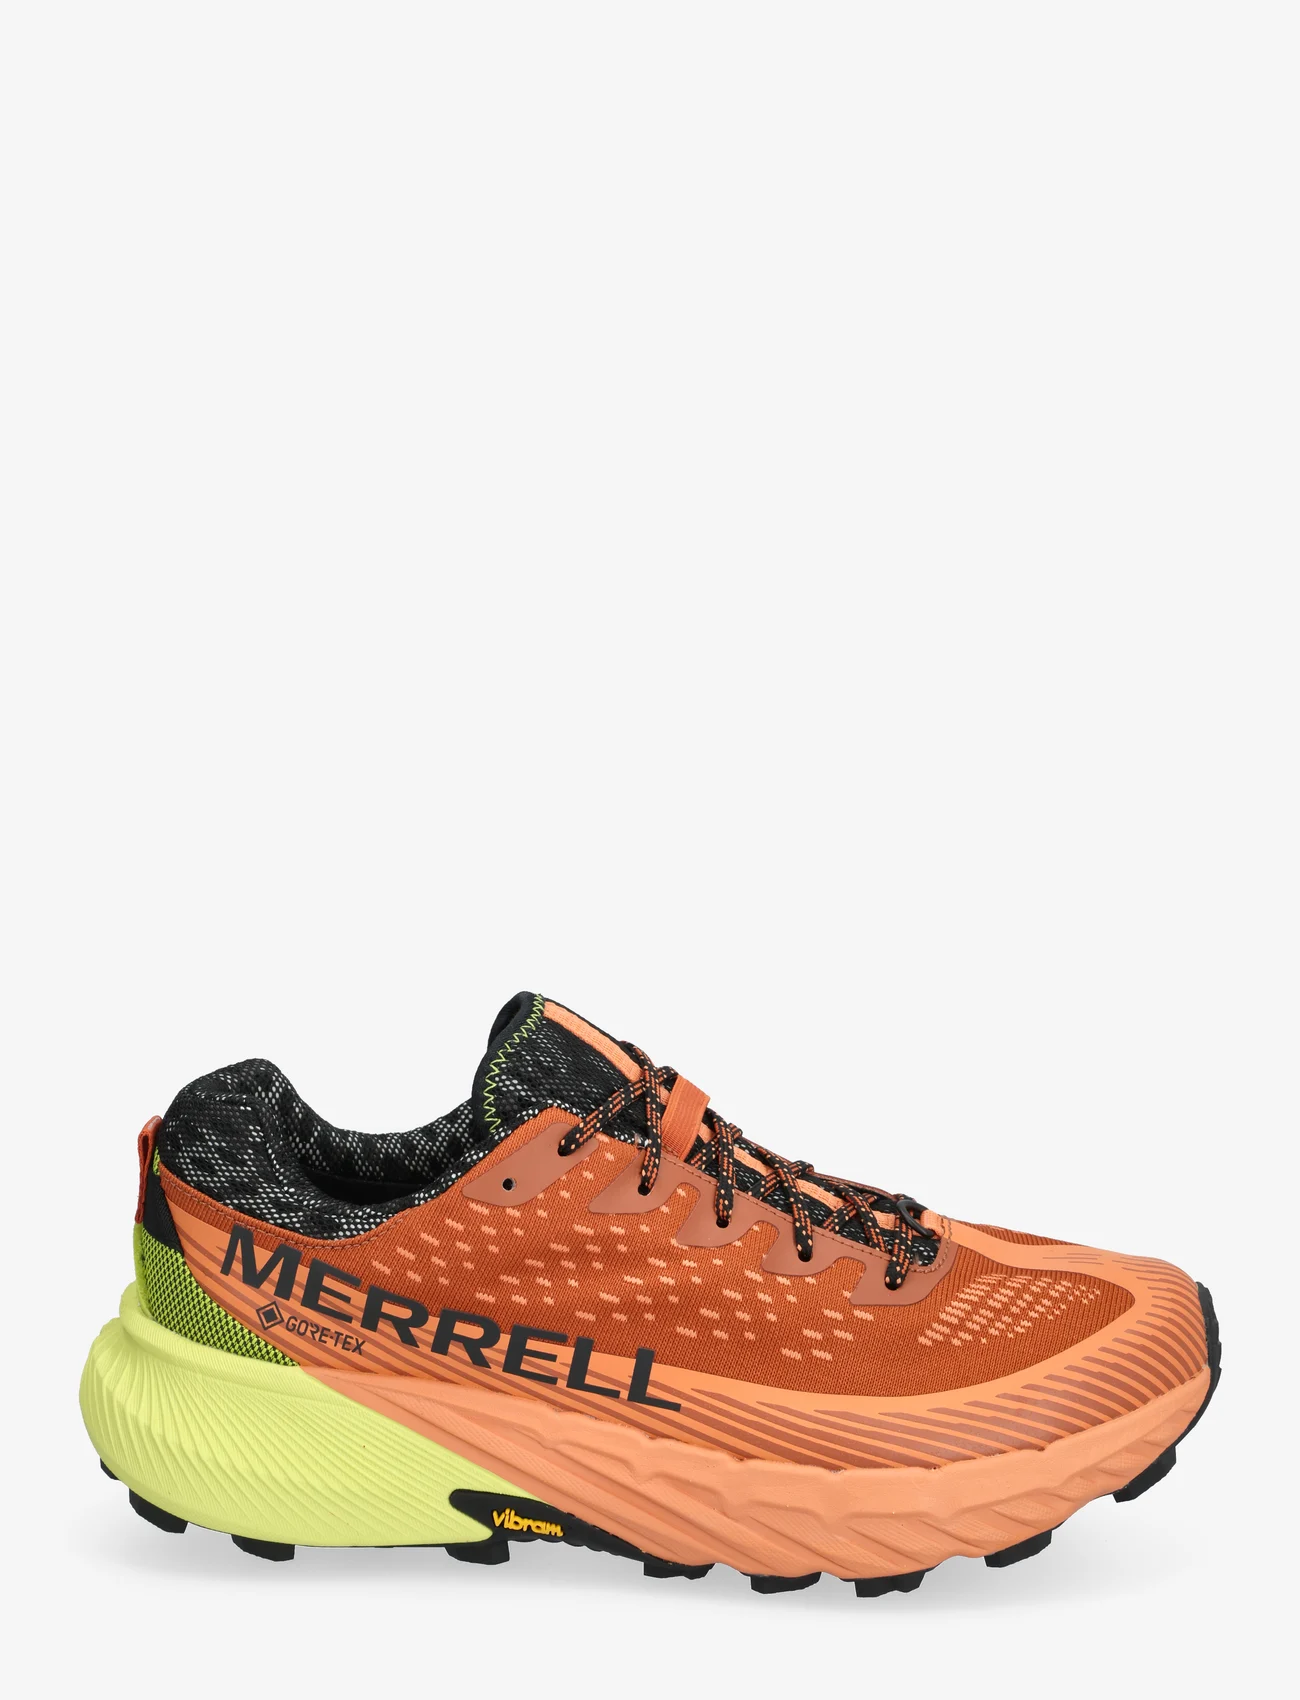 Merrell - Men's Agility Peak 5 GTX - Clay/Mel - laufschuhe - clay/melon - 1